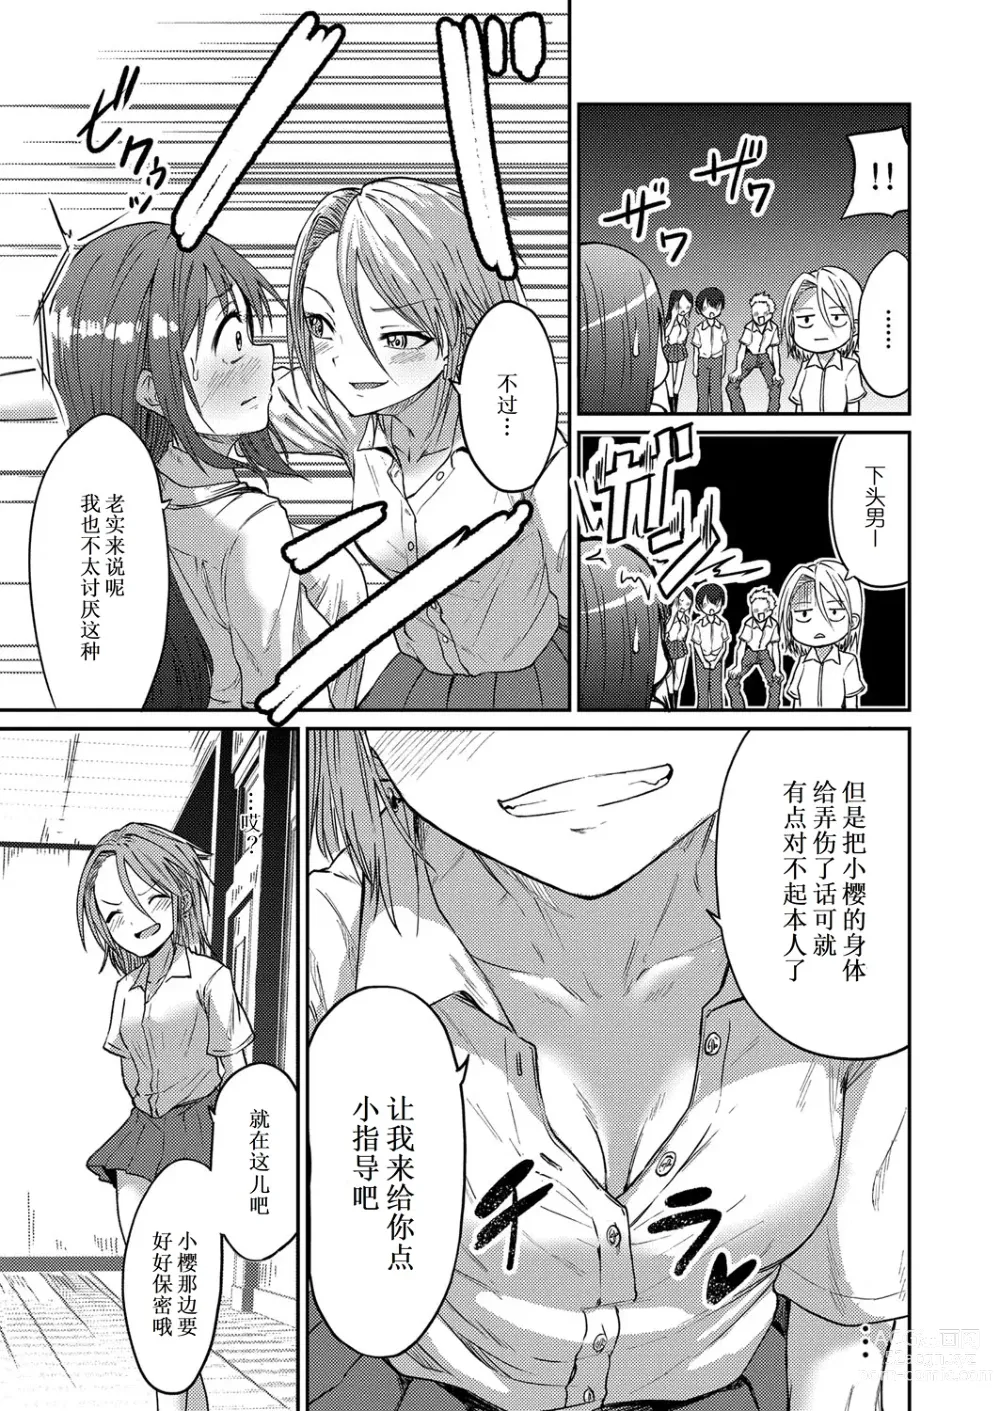 Page 3 of manga IREKAWARI